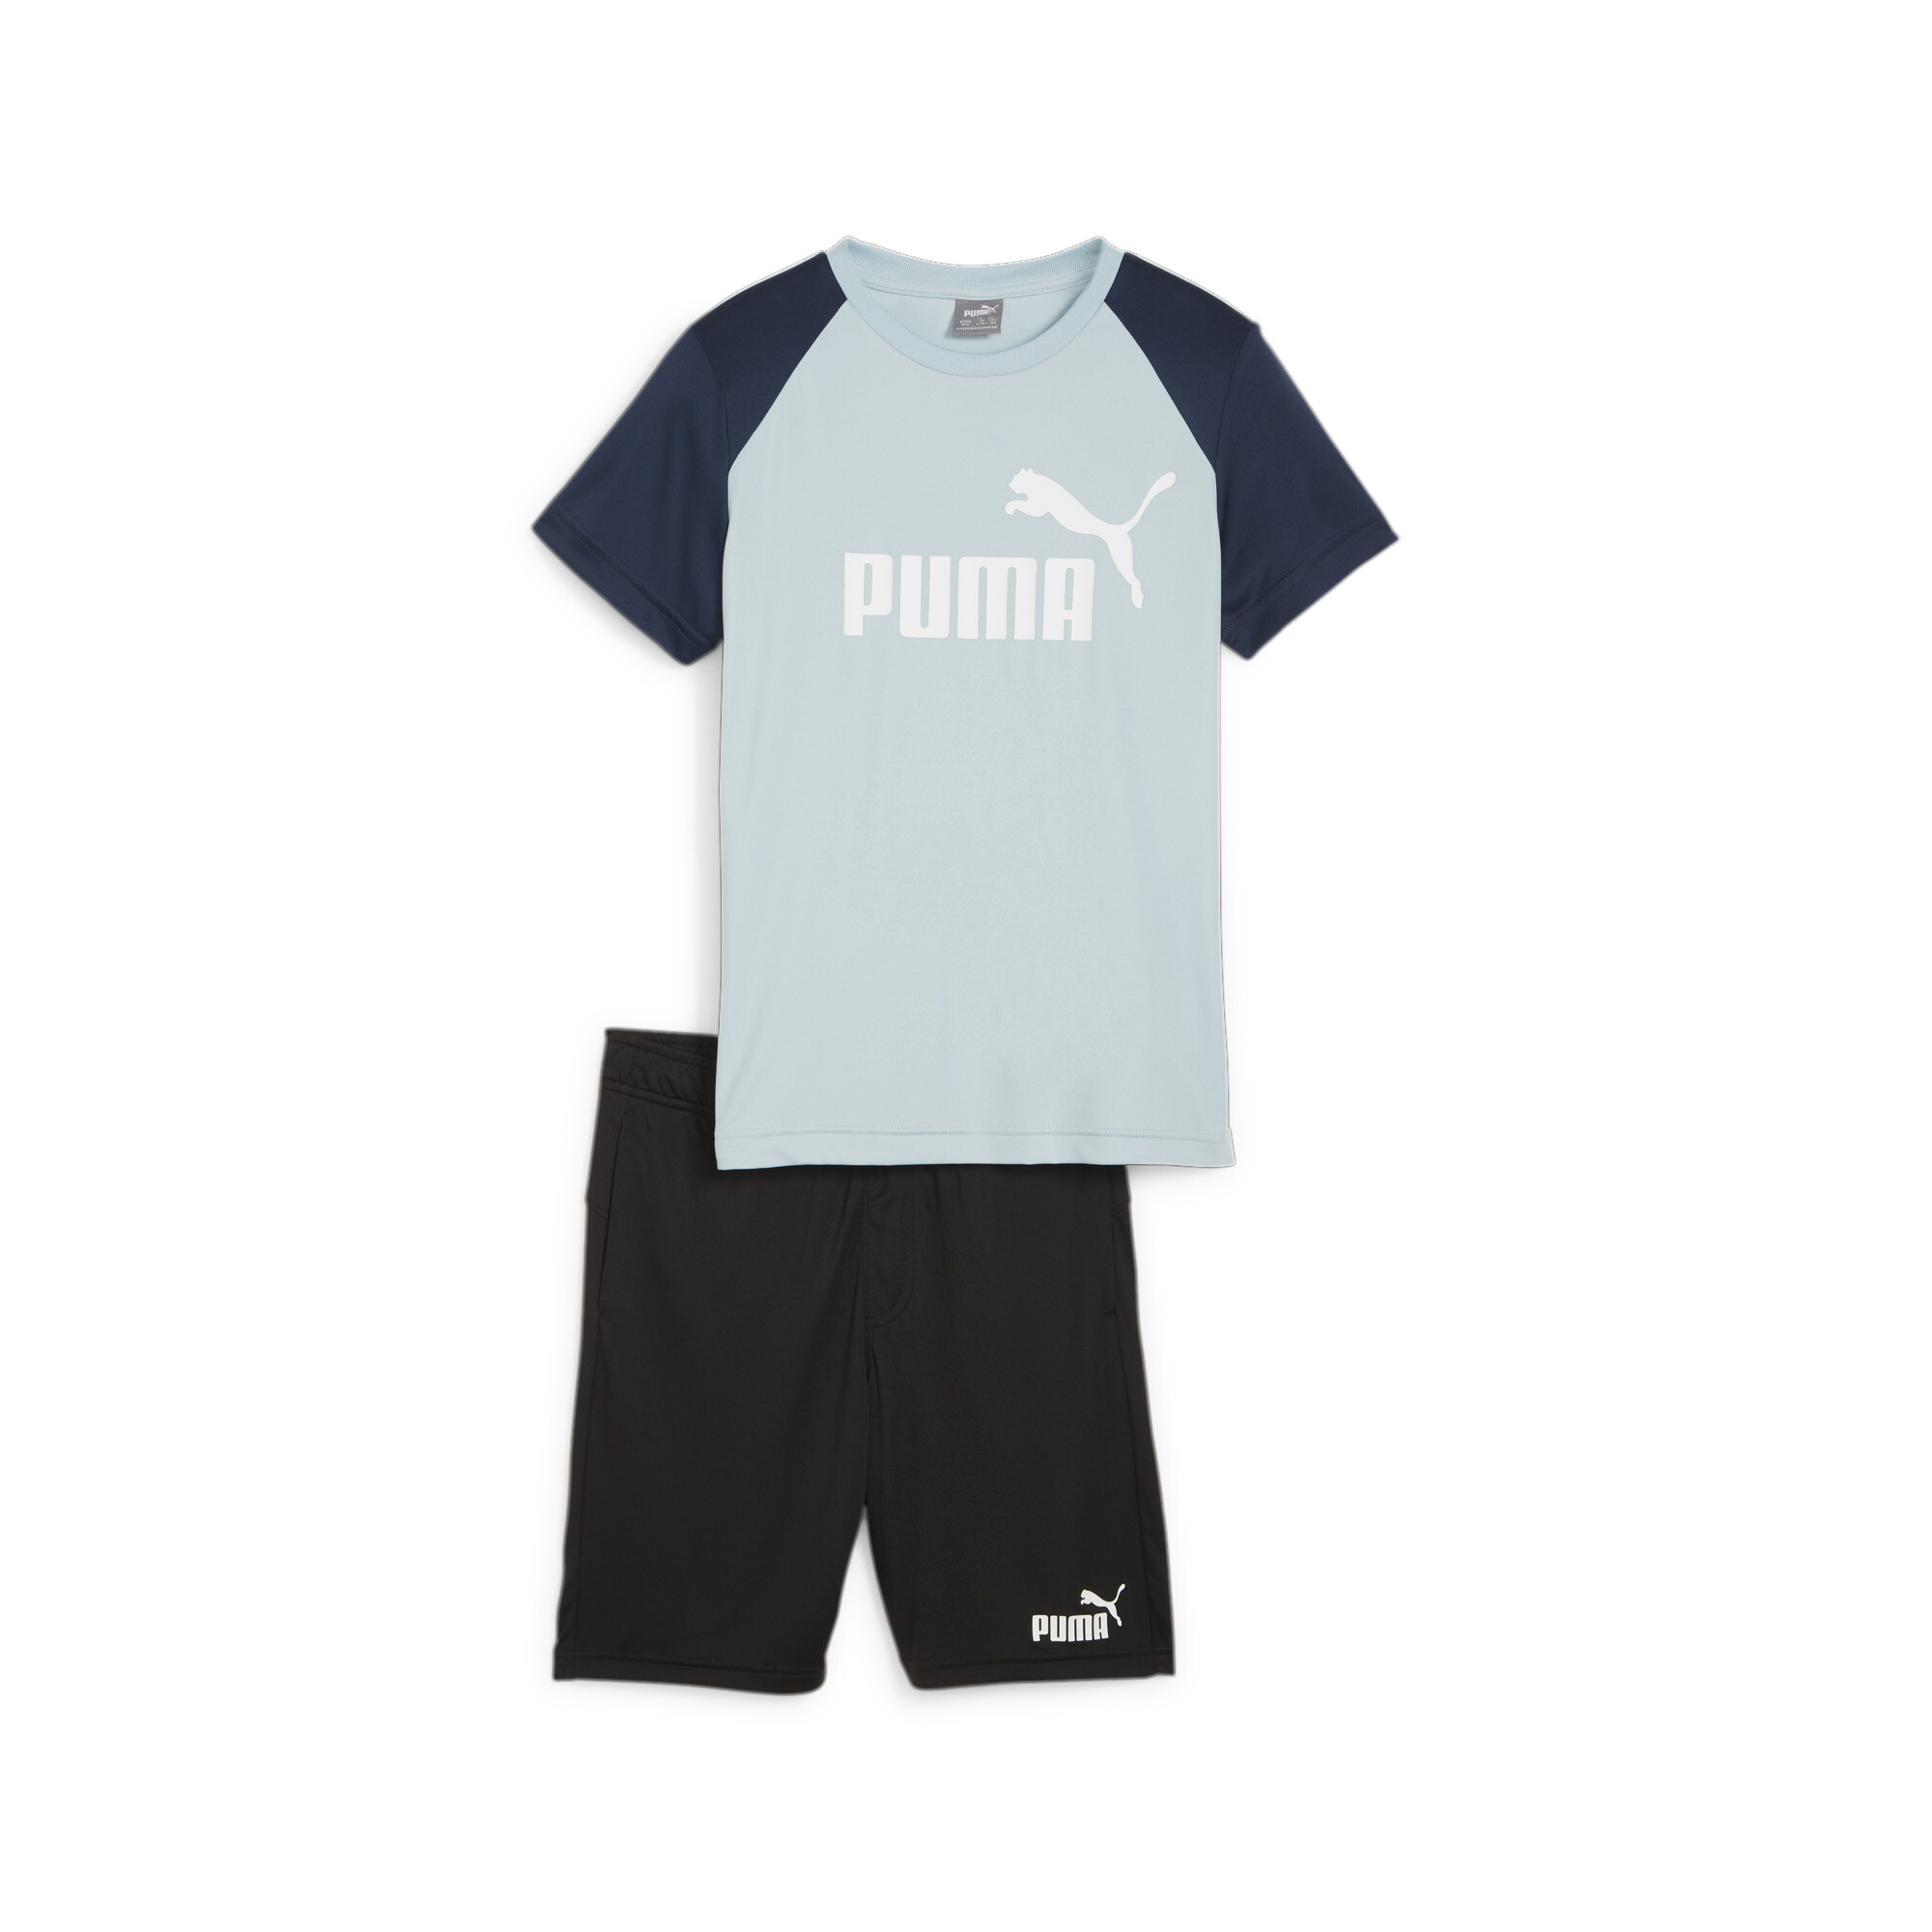 Men's Puma Polyester Youth Shorts Set, Blue, Size 4-5Y, Clothing